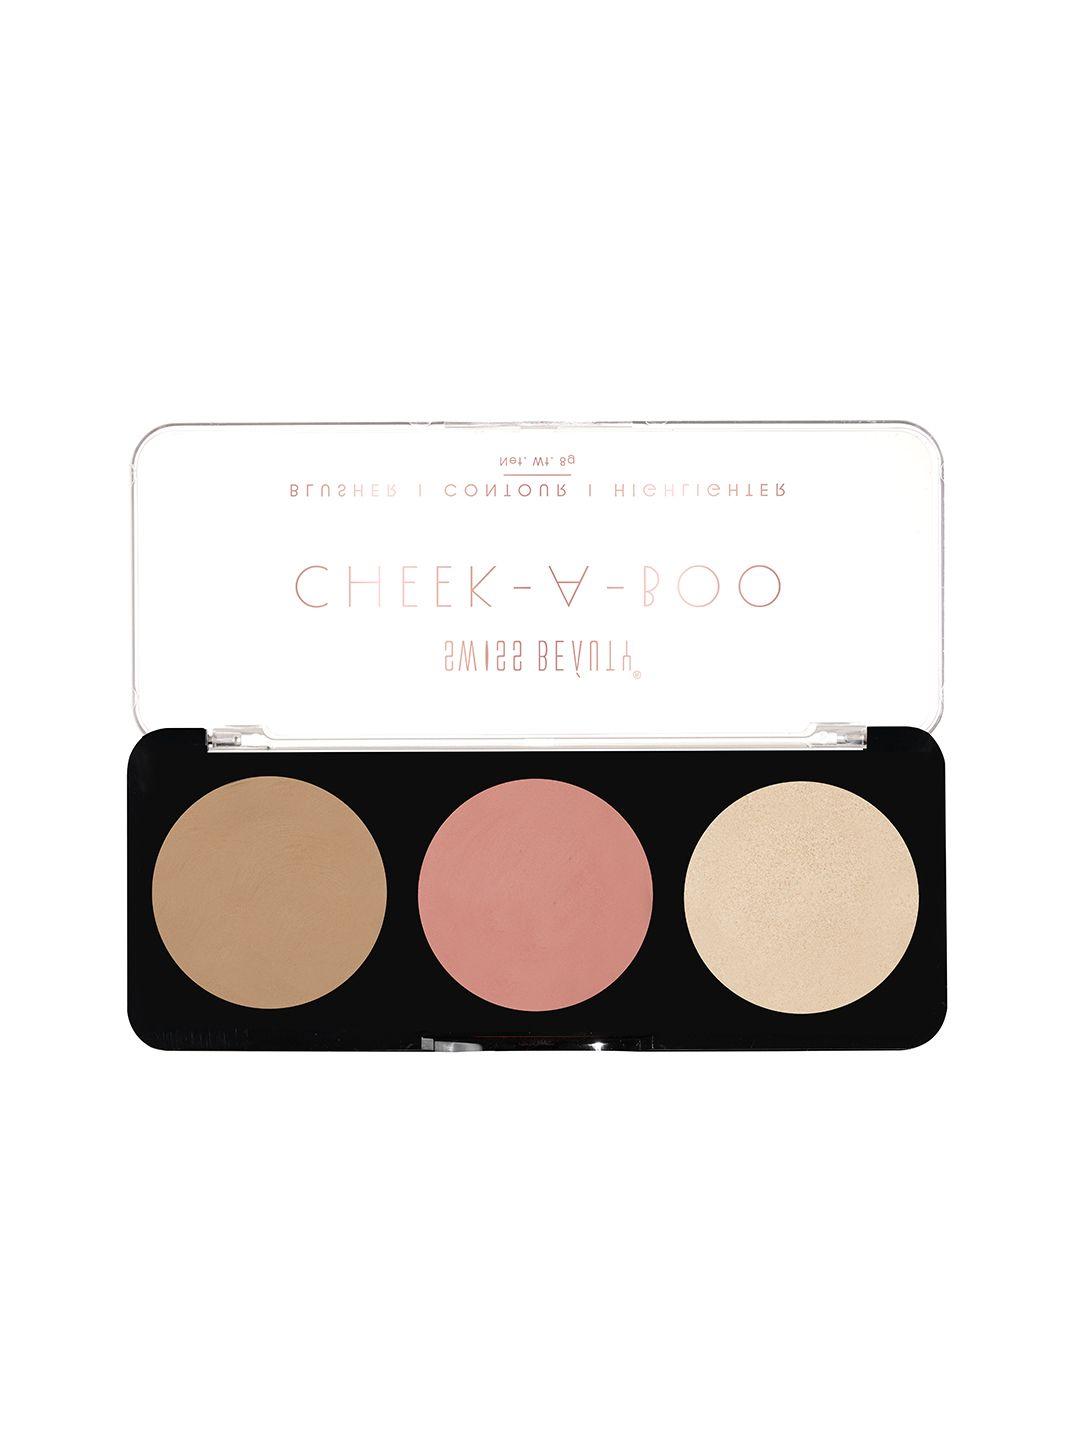 swiss beauty cheek-a-boo 3 in one highlighter contour & blusher face palette 8g - 02